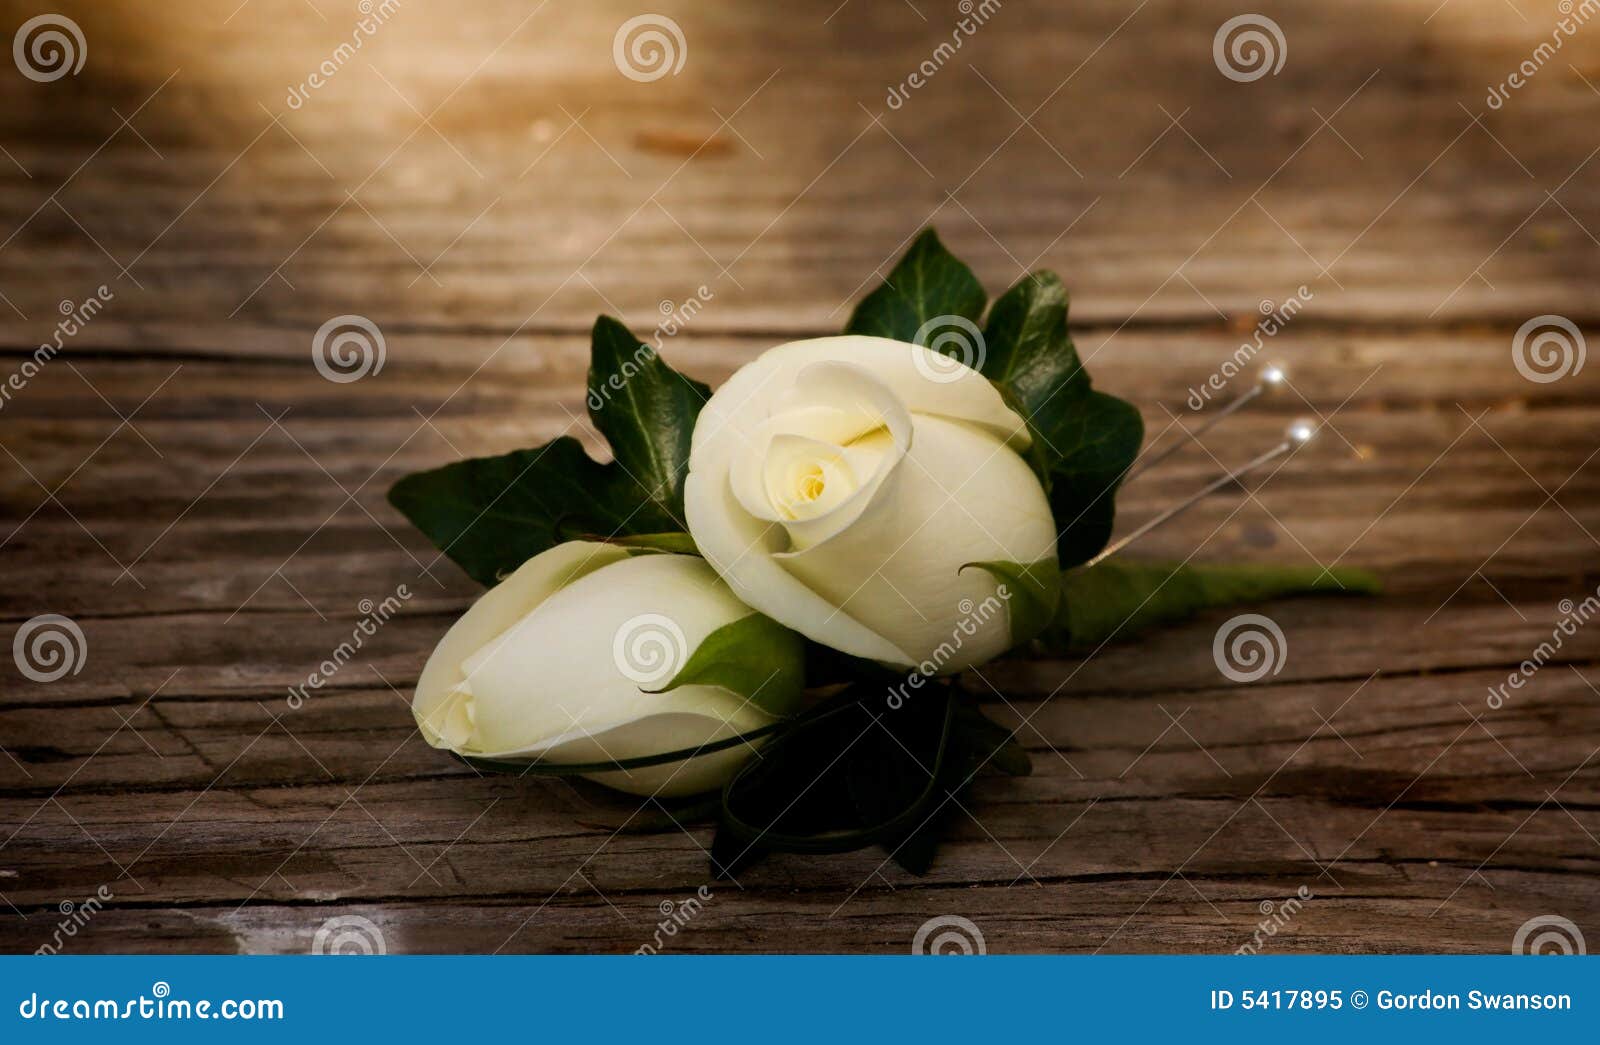 grooms buttonhole flower